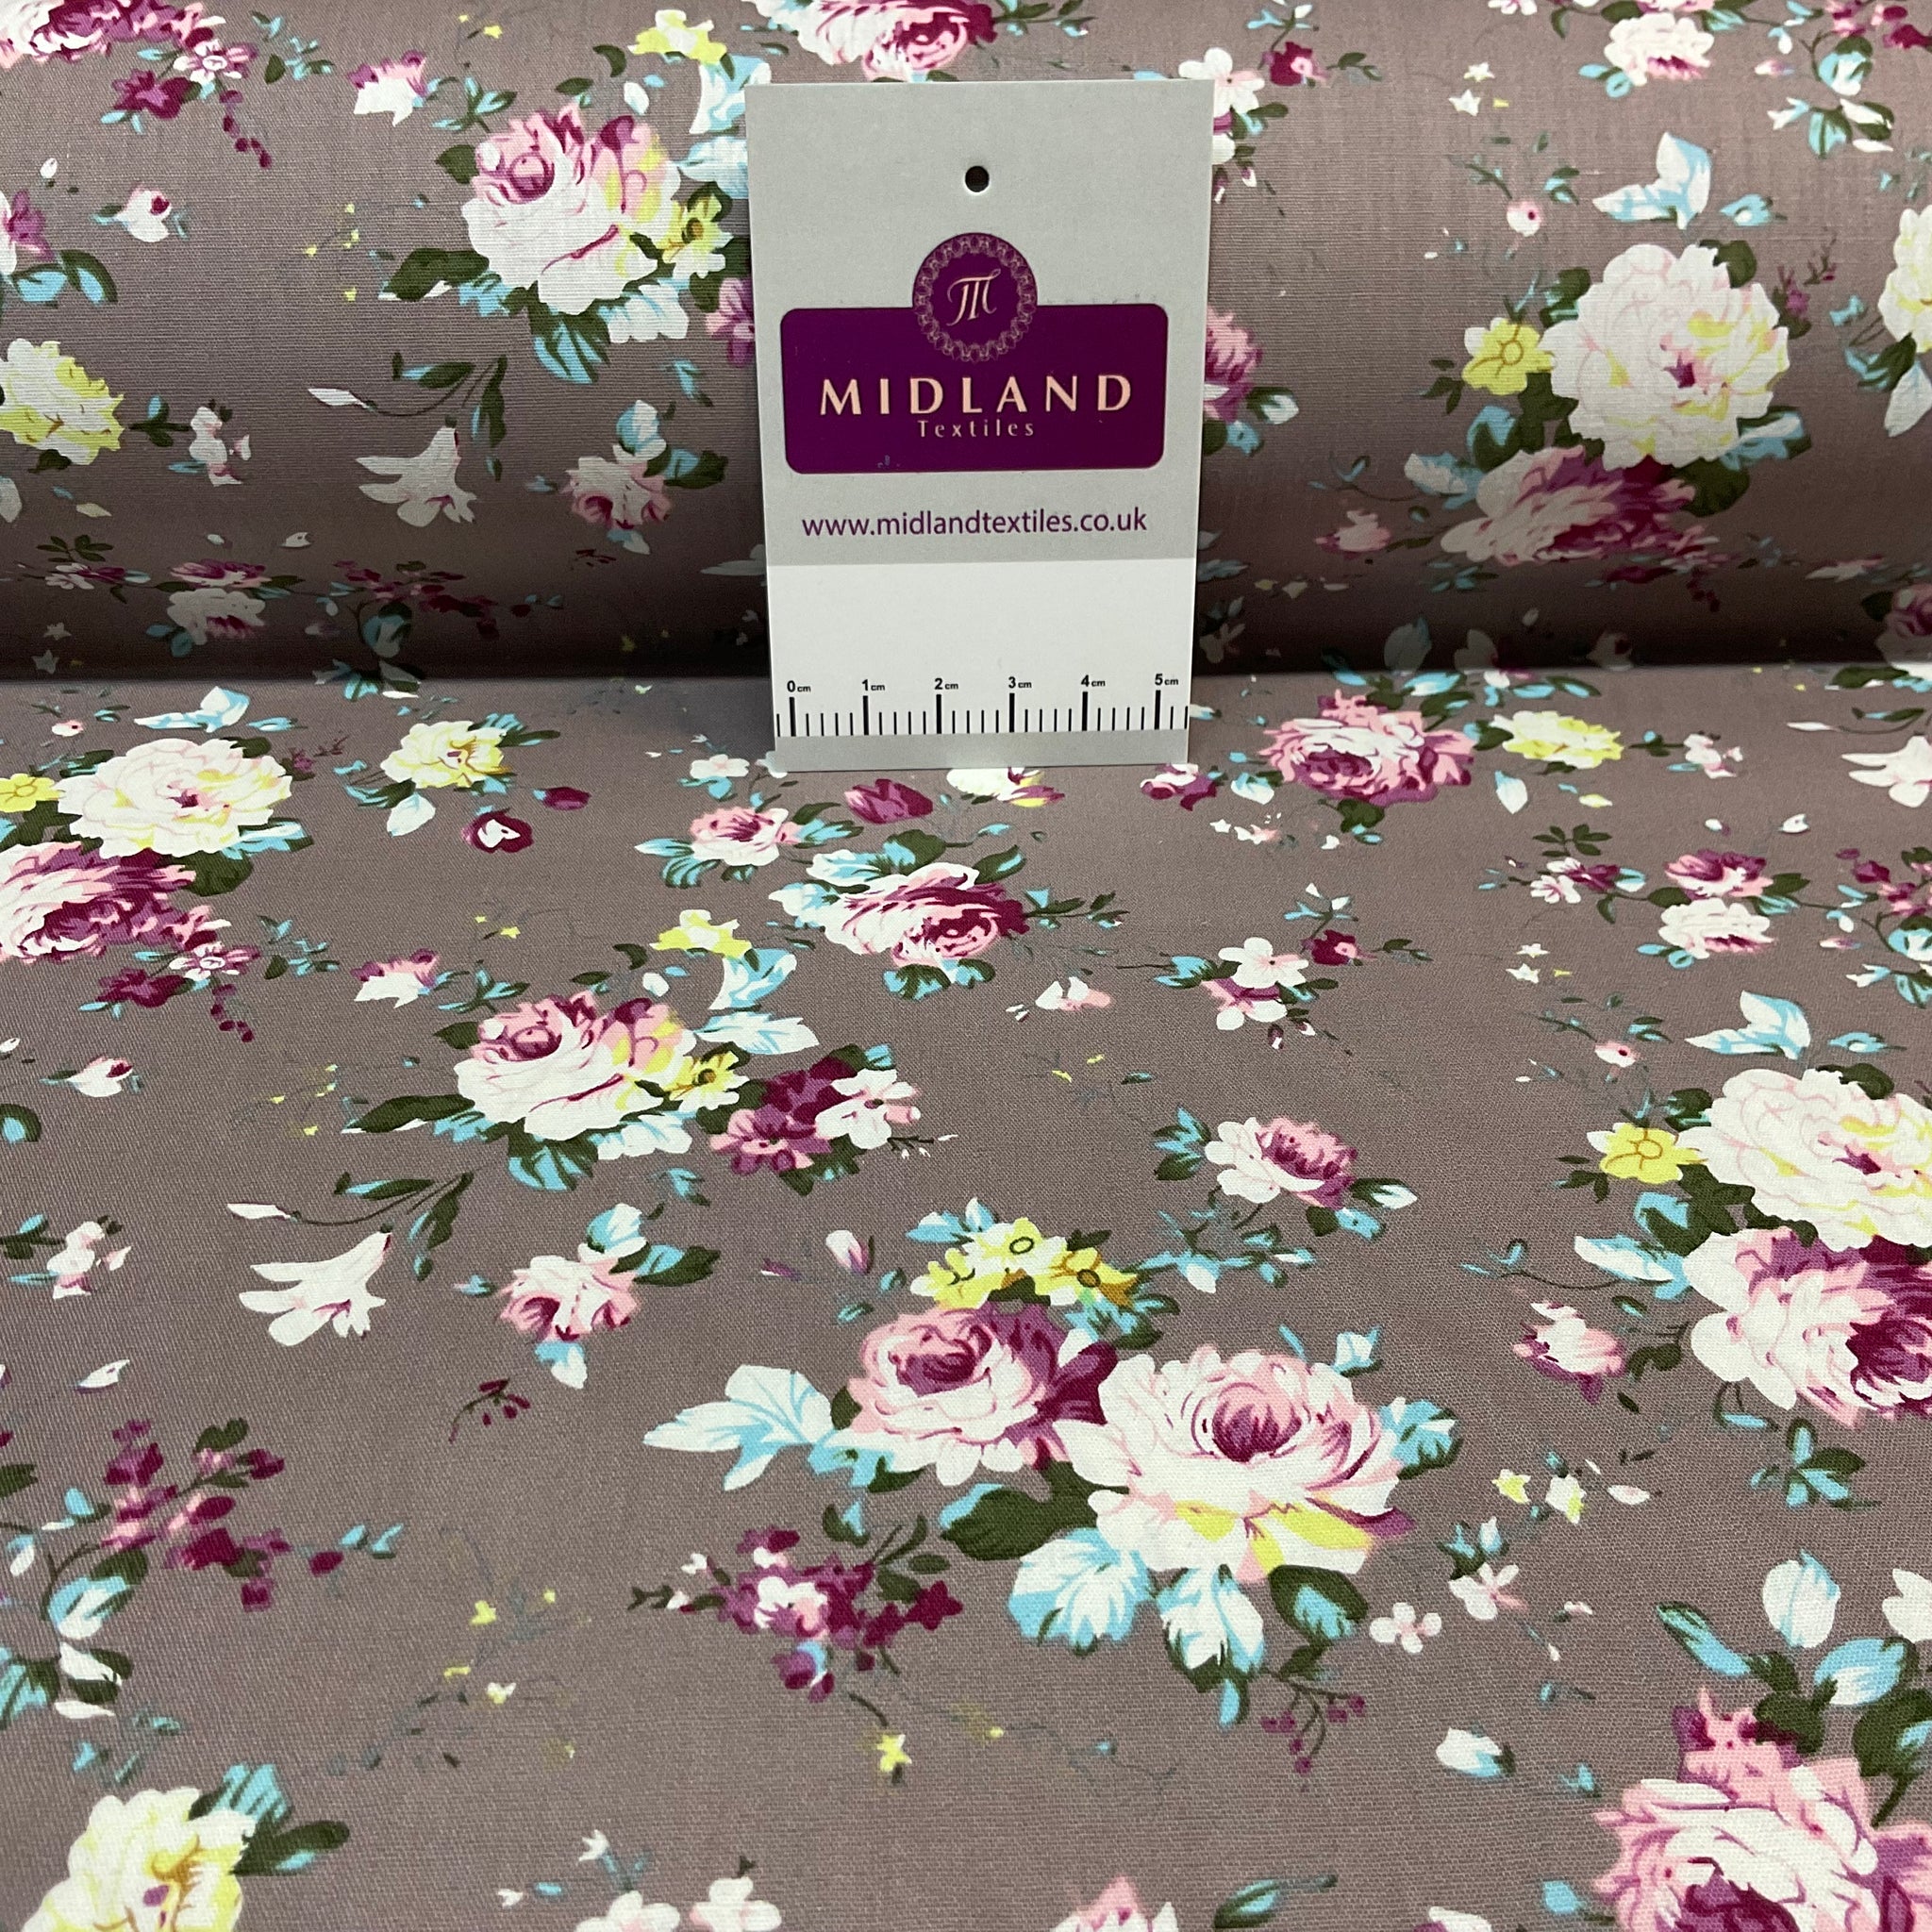 Vintage Floral 100% cotton printed dress craft fabric 150cm wide M1741